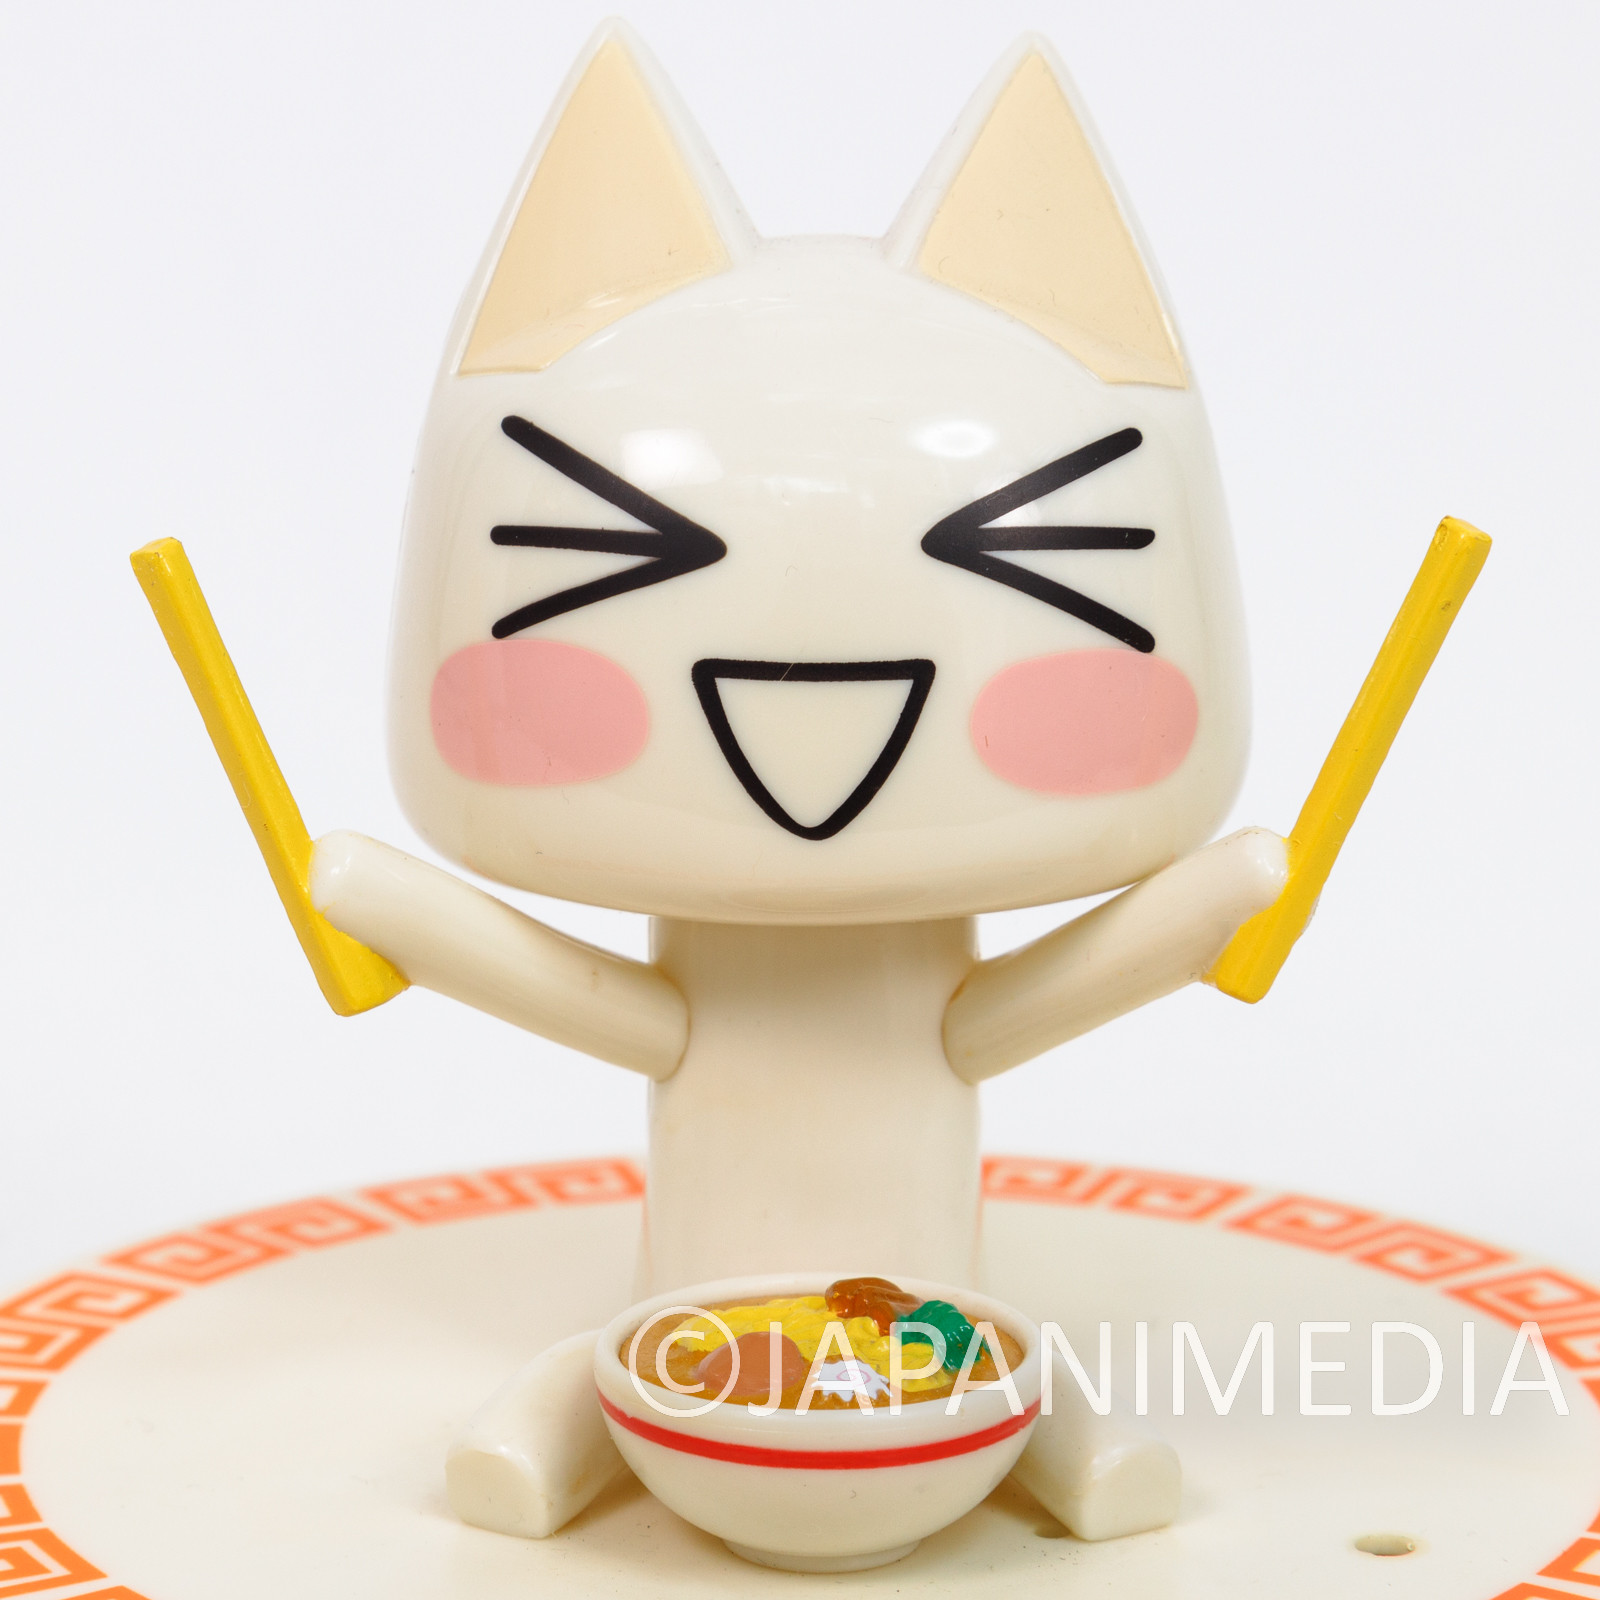 [JUNK ITEM] Sony Cat Doko Demo Issyo TORO INOUE 3 minitues Cooking Timer Figure